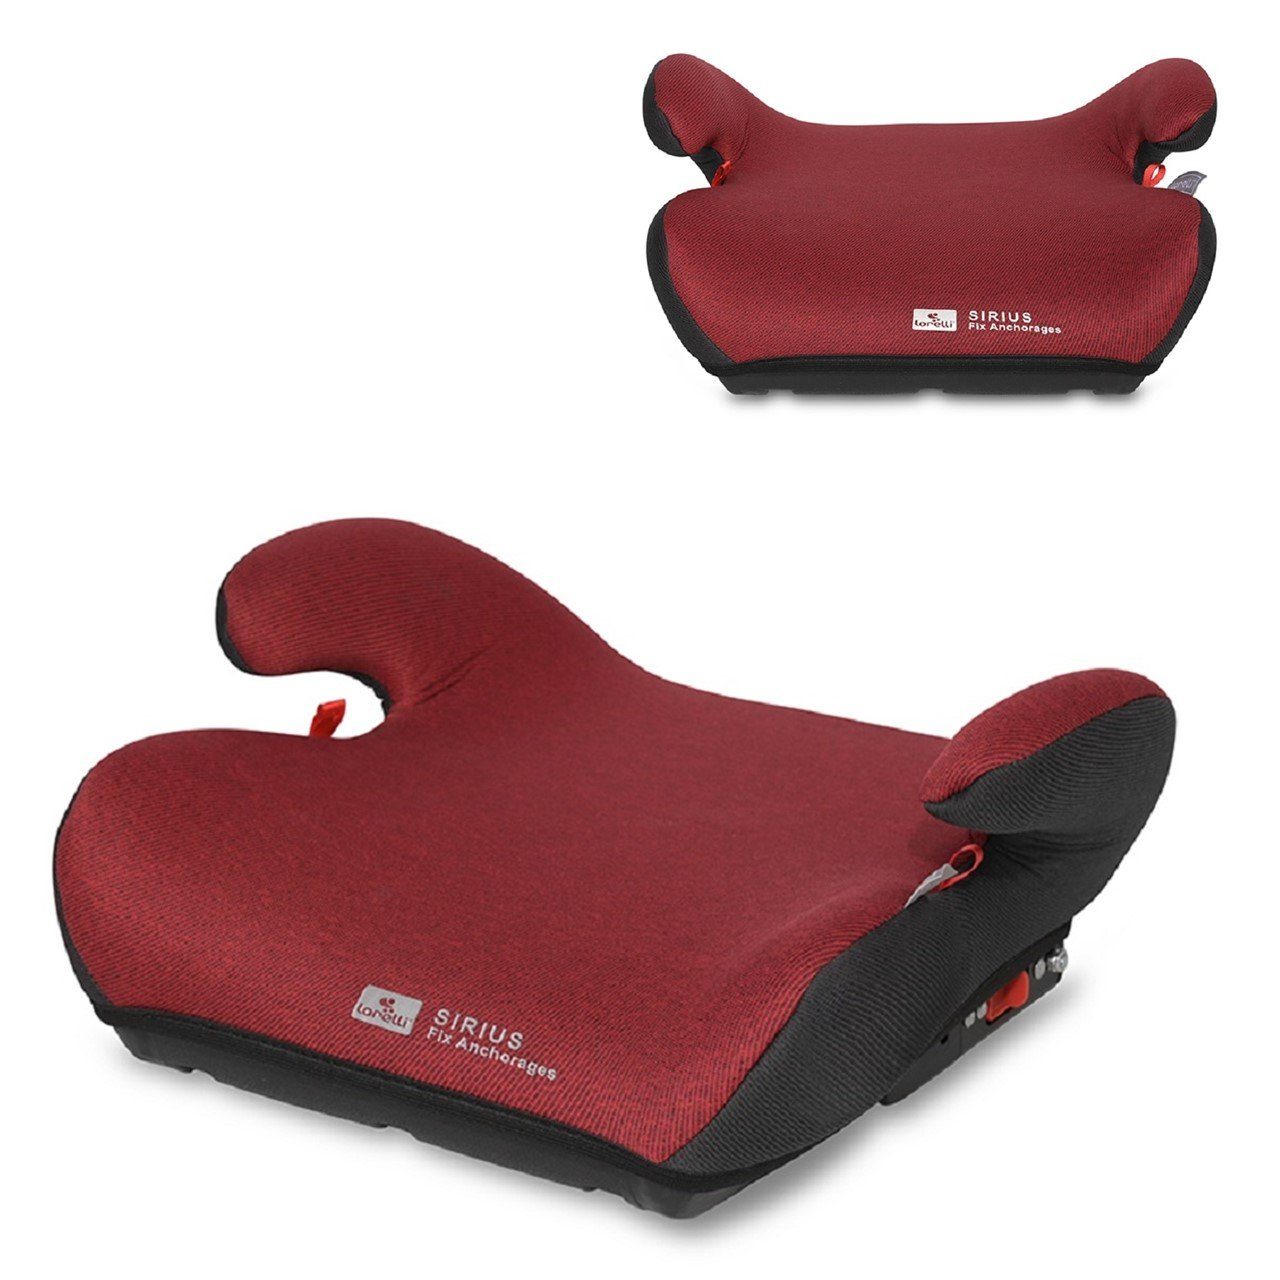 Lorelli Kindersitzerhöhung Bezug Isofix 36 (22 kg, Armlehne Gruppe rot abnehmbar - Sirius Sitzerhöhung 36kg) 3, bis